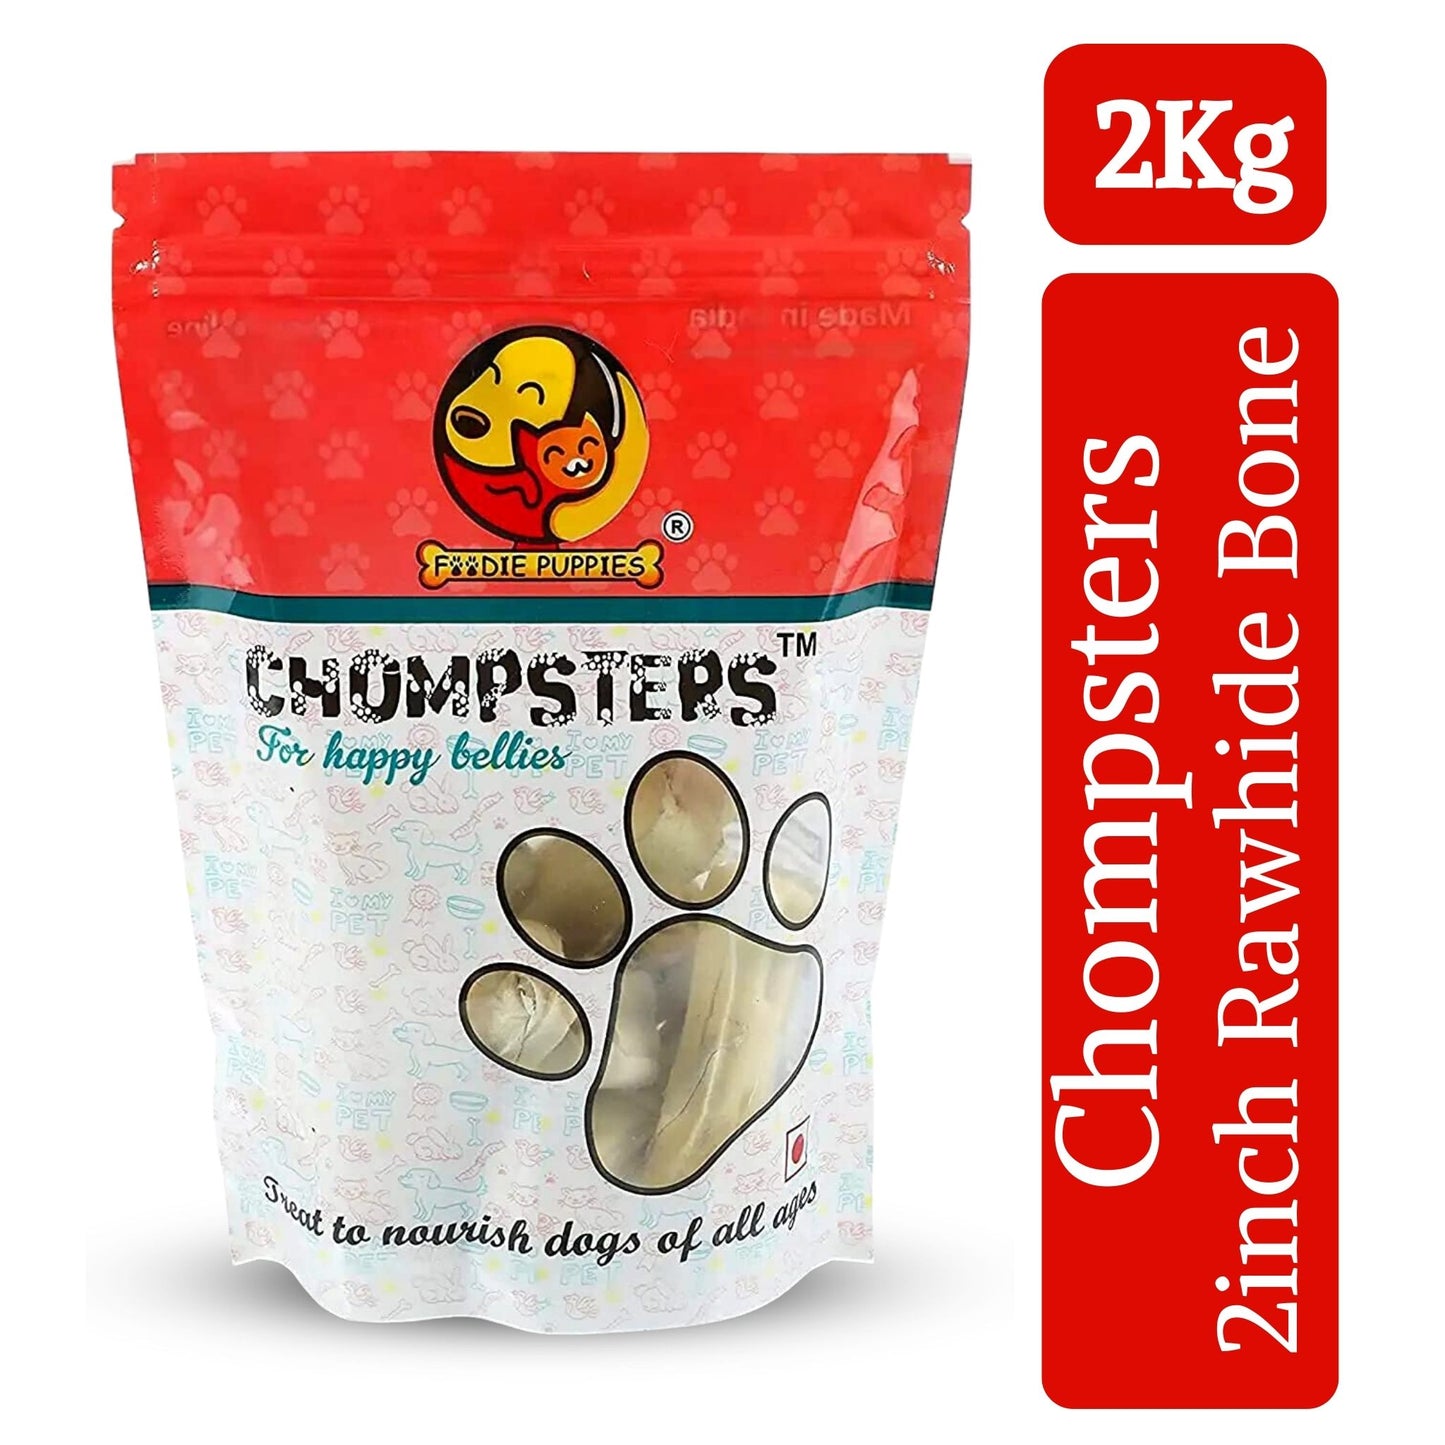 Foodie Puppies Chompsters Rawhide Bone for Dogs - 2inch Bone, 2Kg